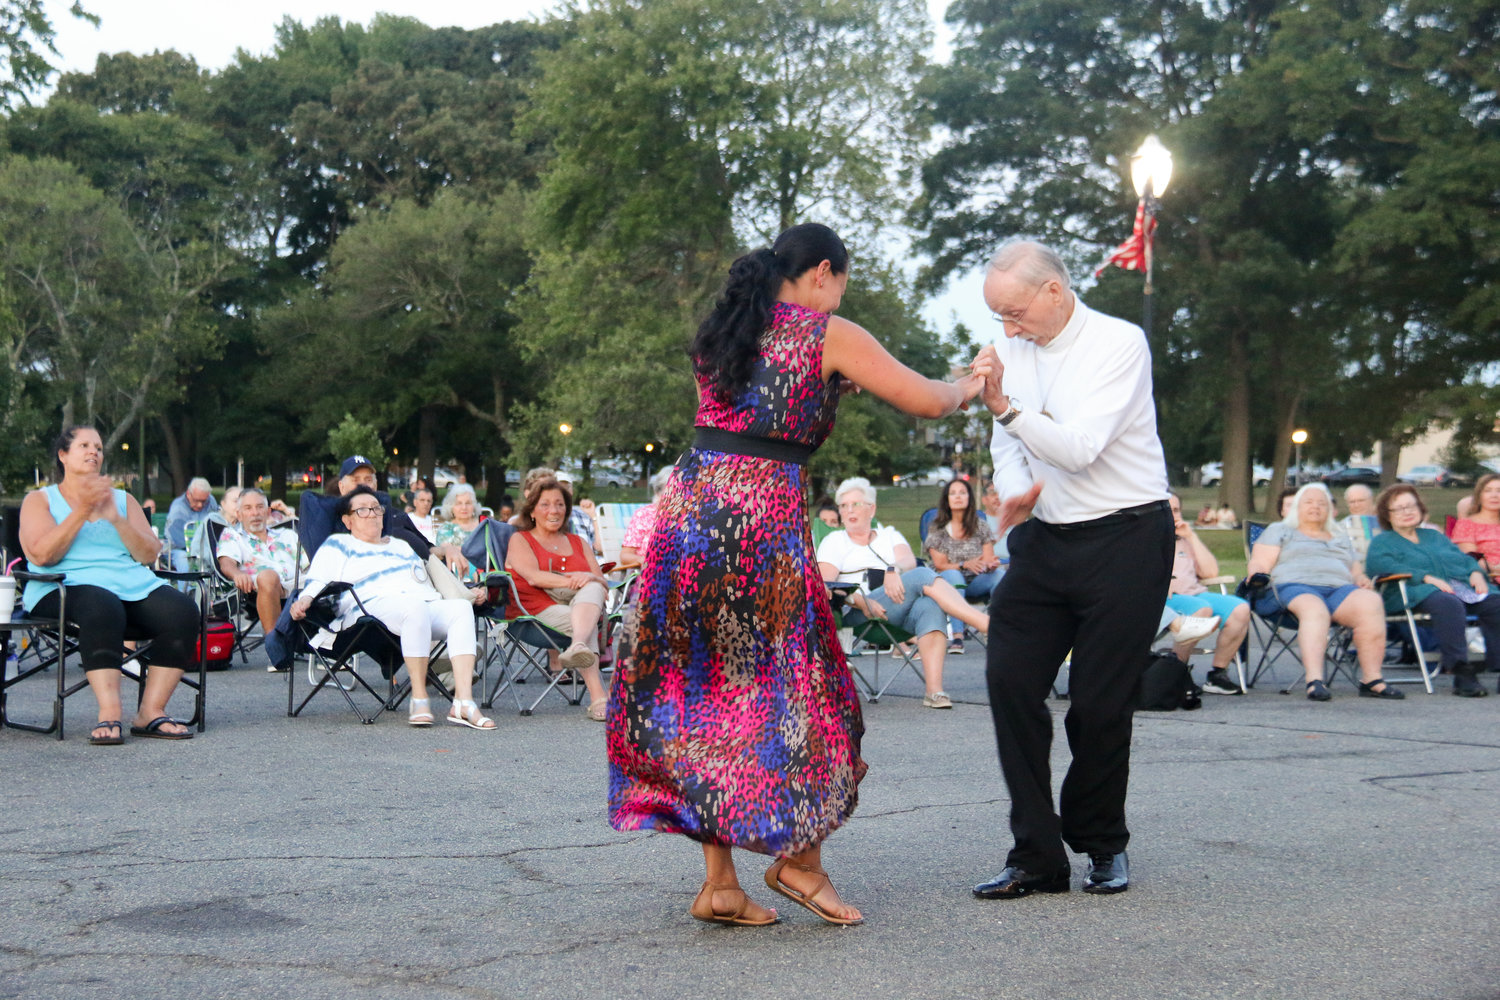 Gaetano Ferrara, known as the Mambo Man of Valley Stream, danced with partner Karina Hernandez at the Bronx Changa concert at the Village Bandshell, near left.